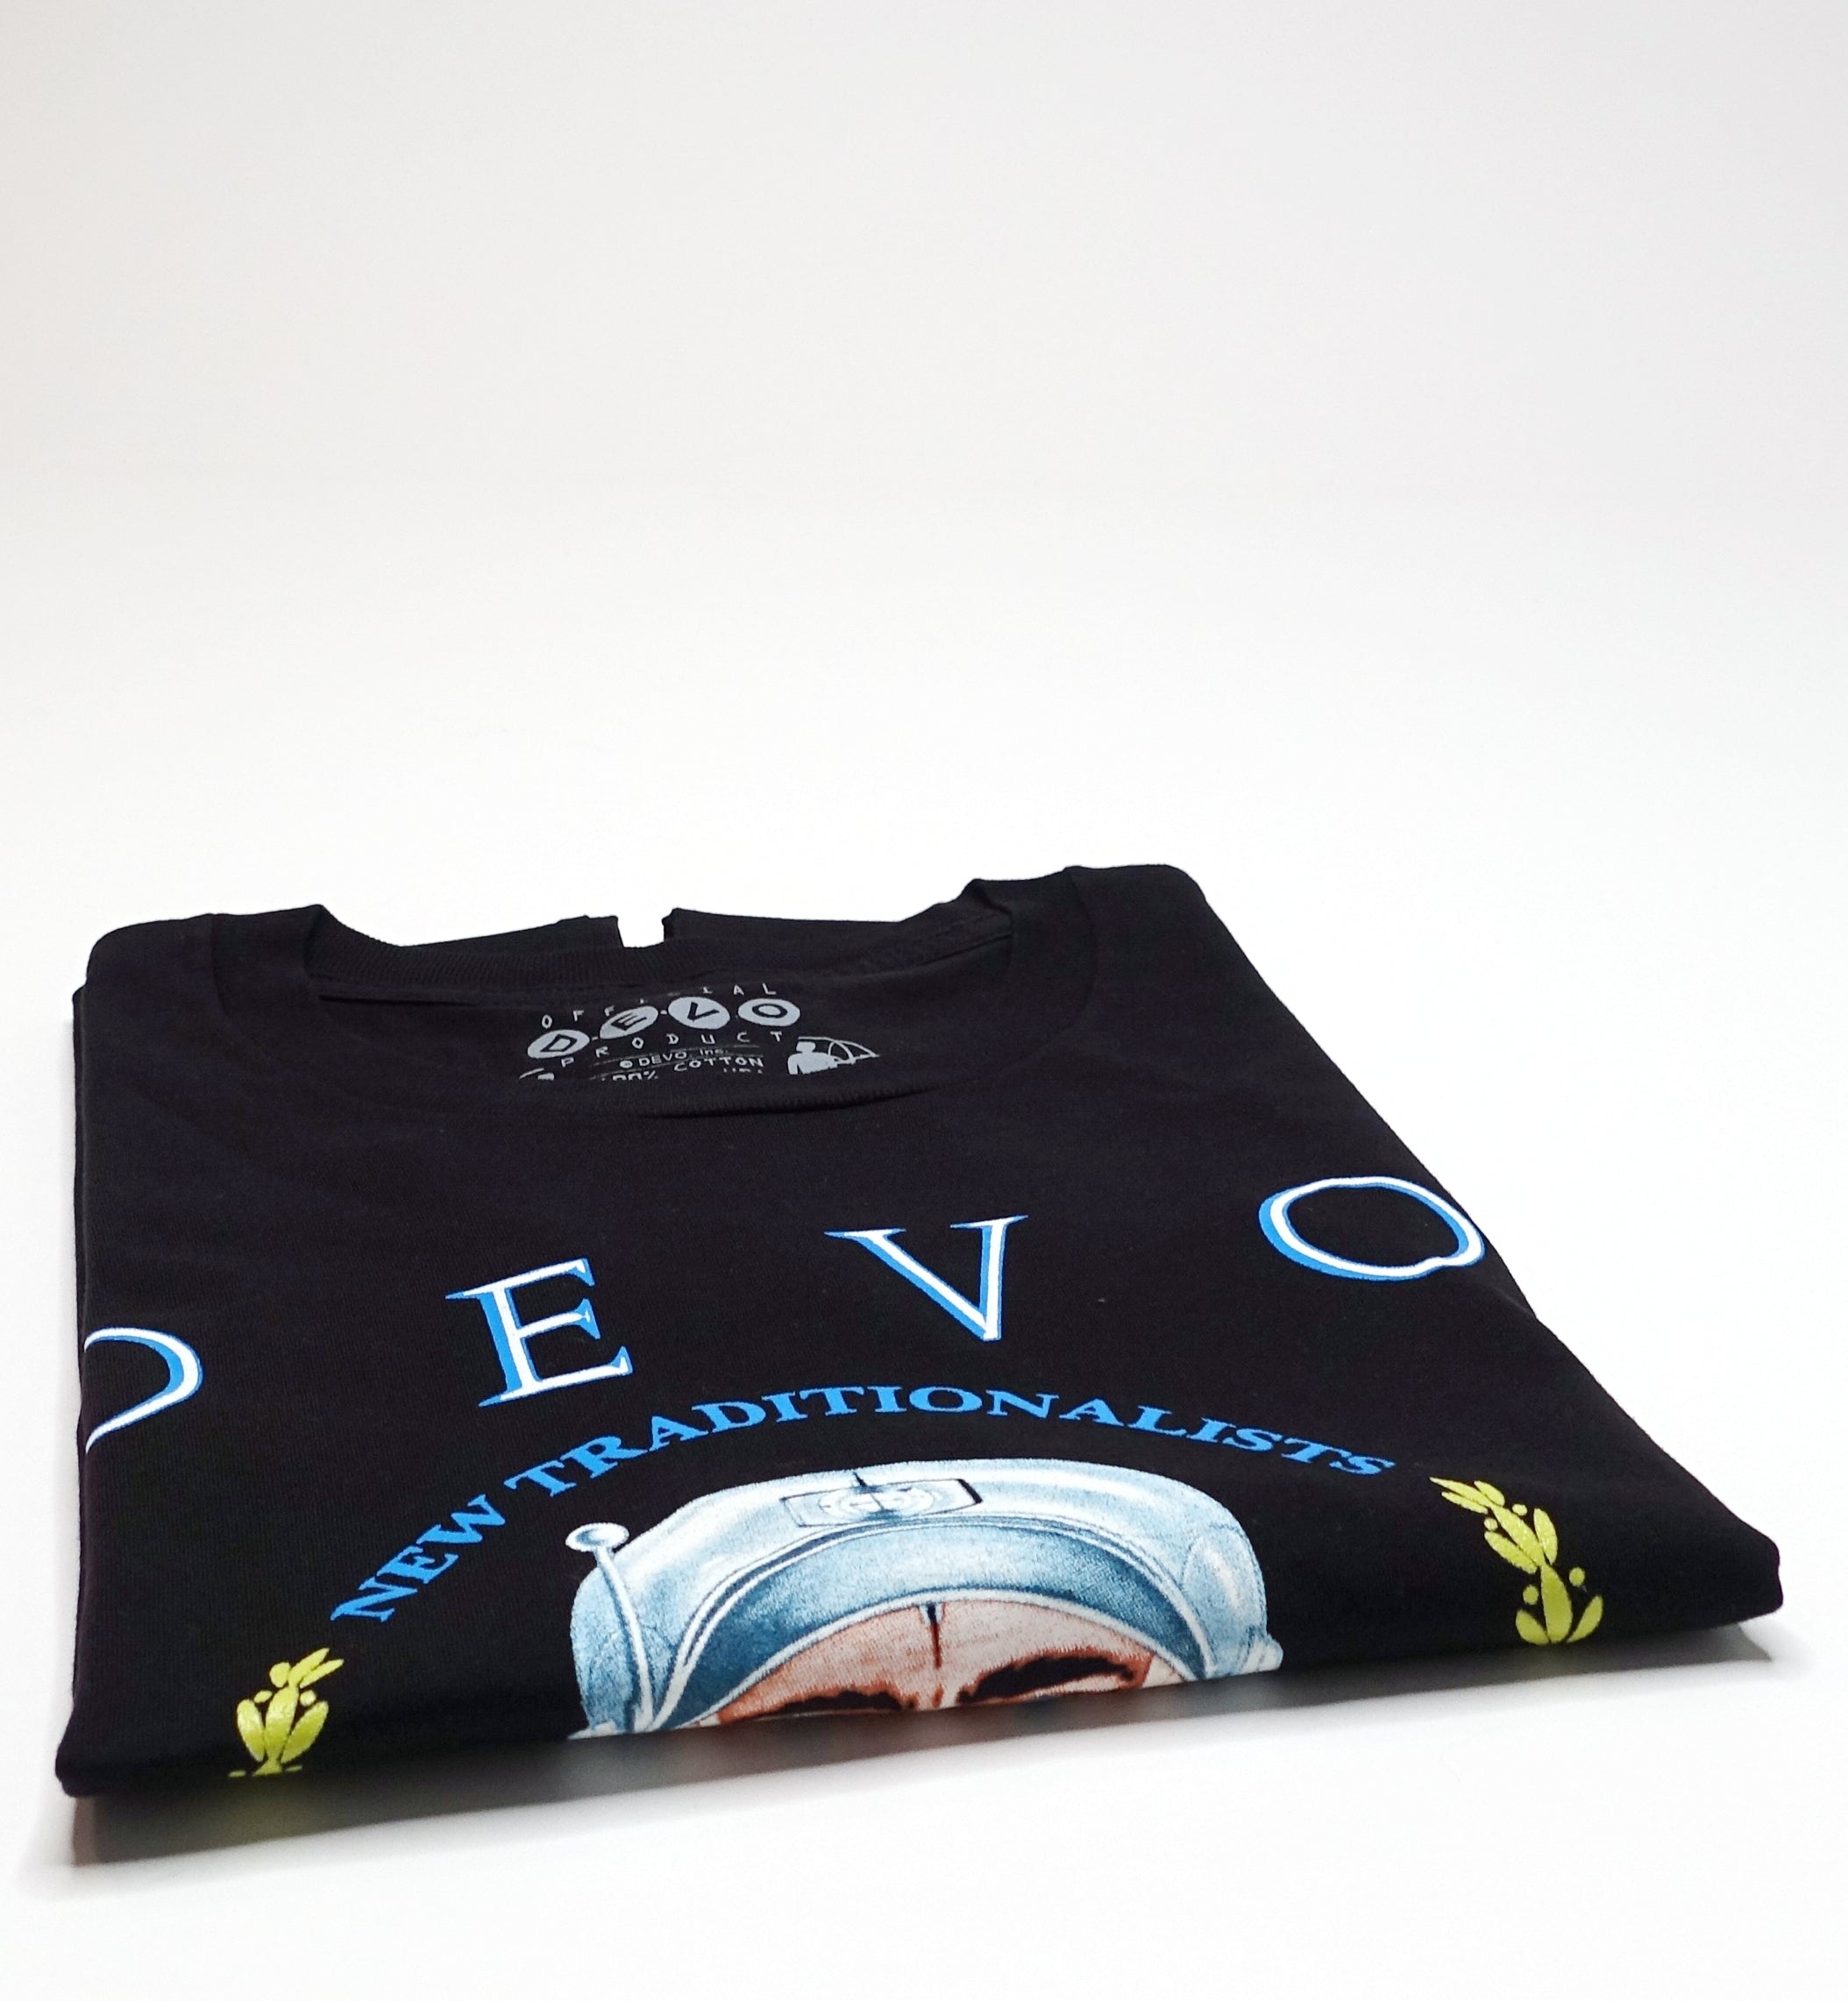 Devo – New Traditionalists 00's Shirt Size Large